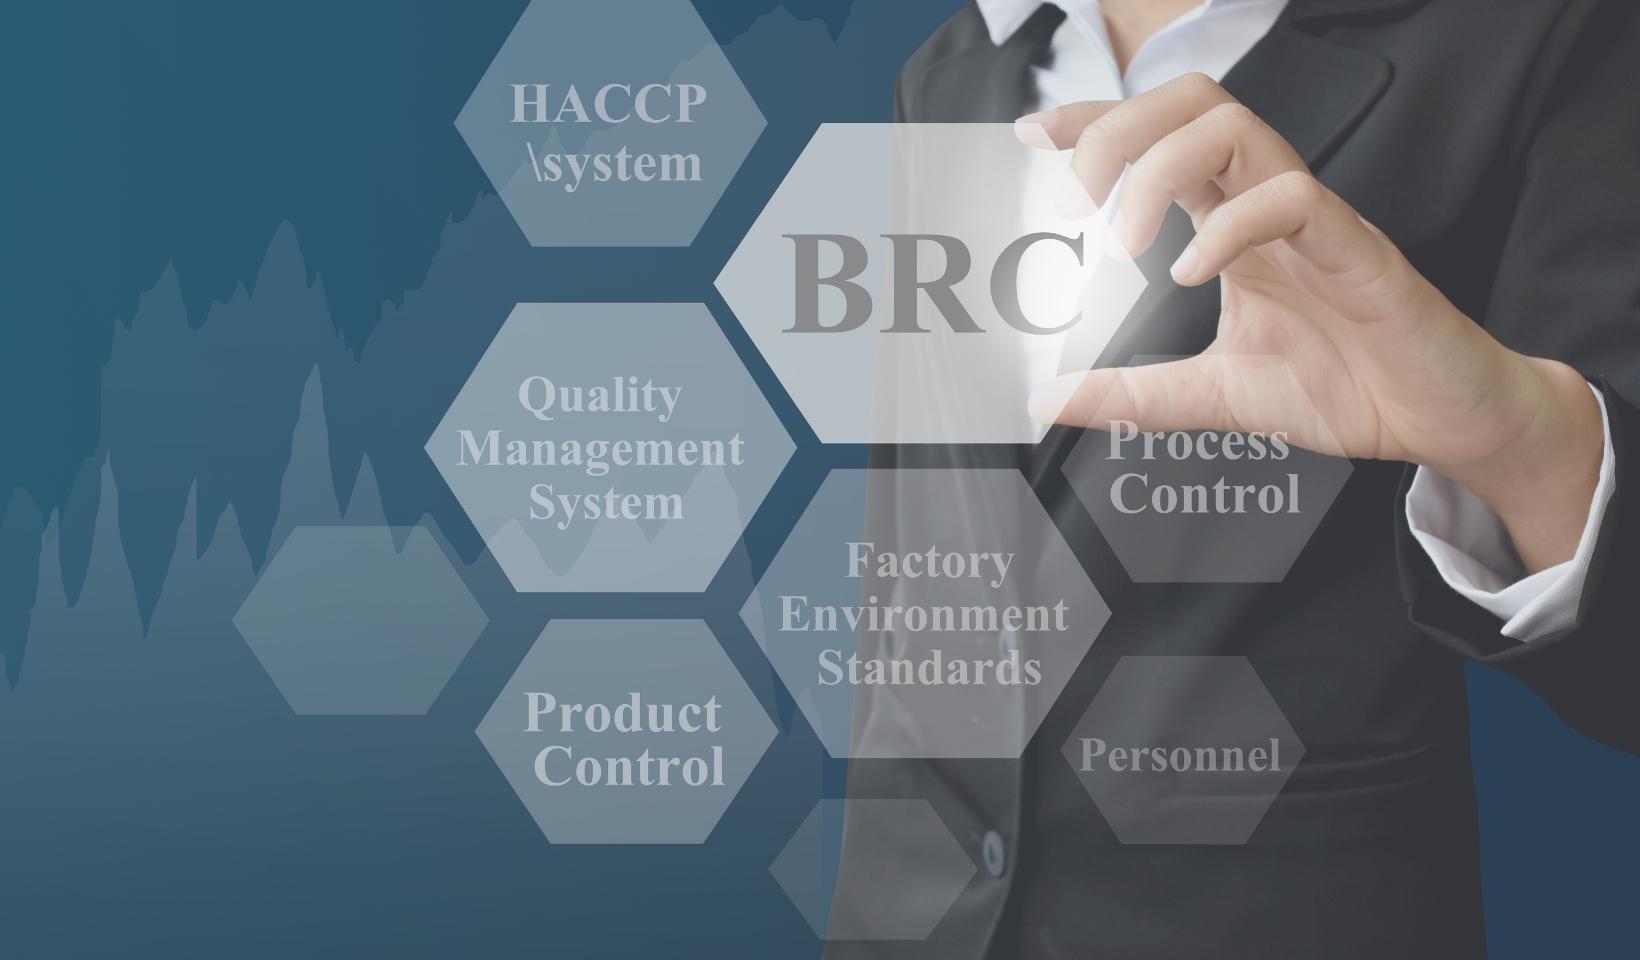 BRC viết tắt là British Retail Consortium